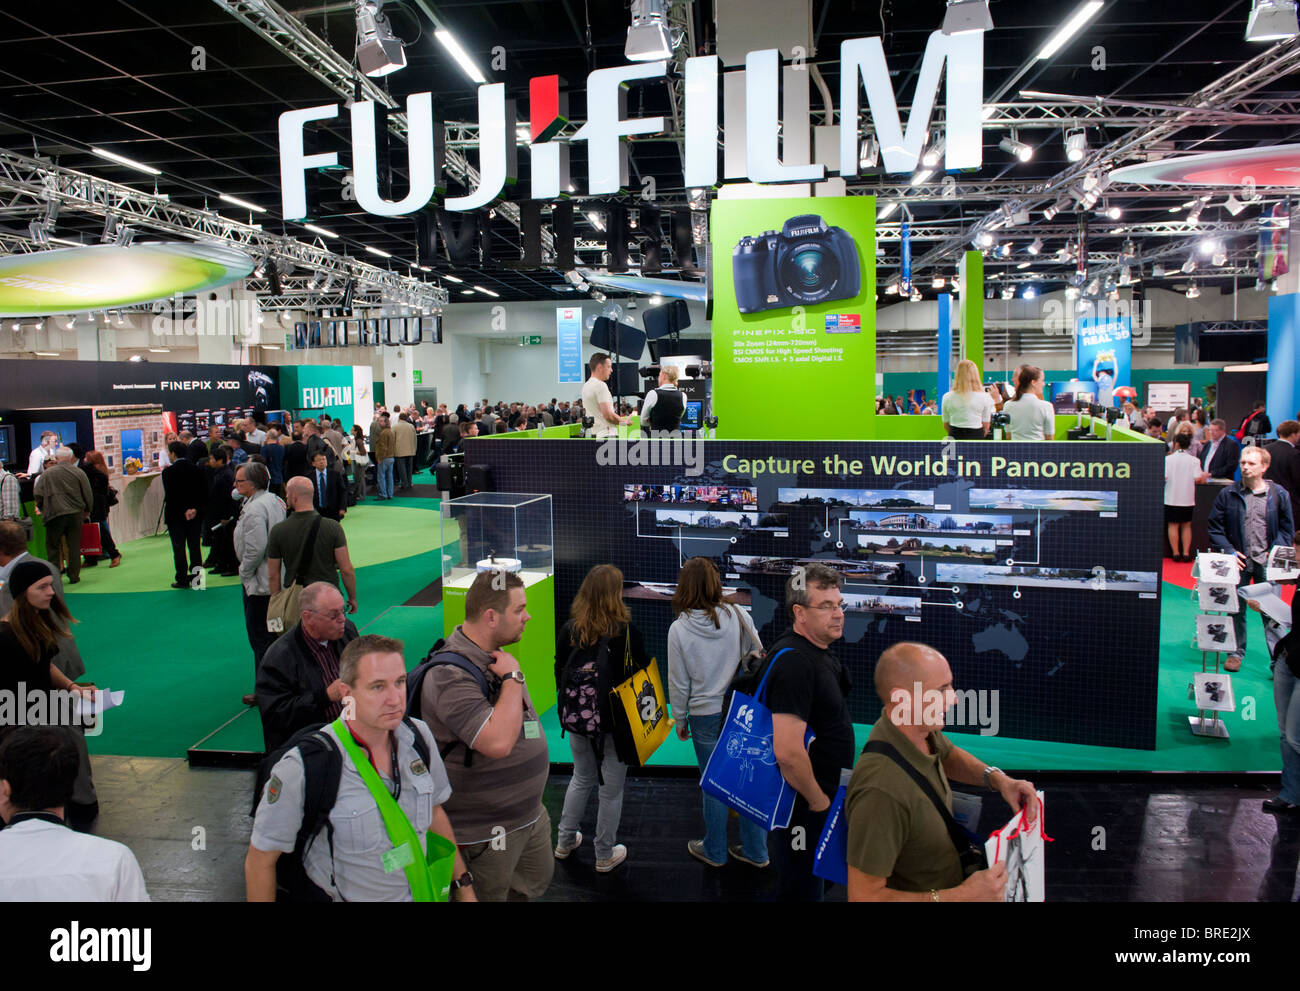 Vorbei an Fujifilm Massen stehen digital imaging Messe Photokina in Köln Stockfoto